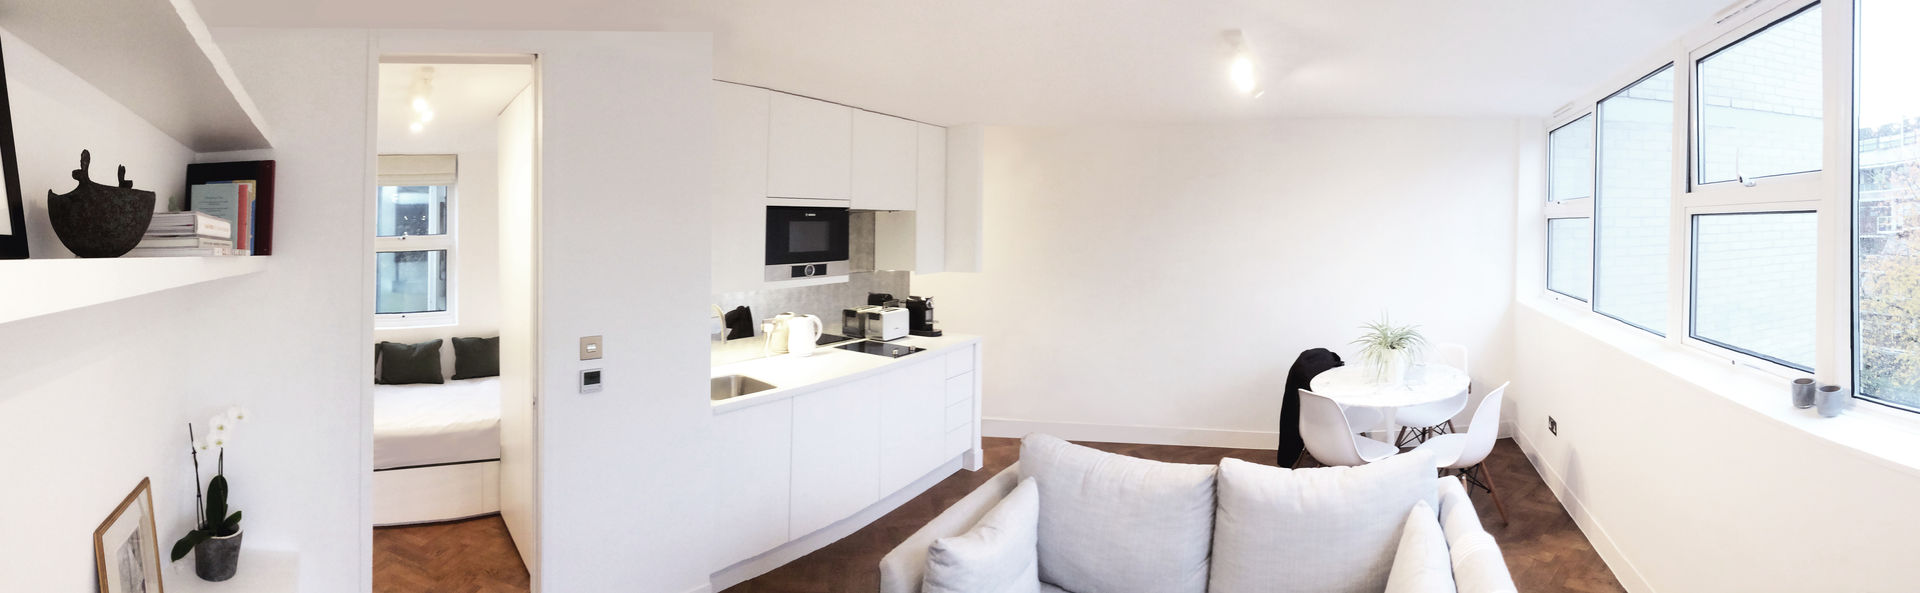 Refurbishment of a 250sqft apartment next to Hyde Park, London, W2, GK Architects Ltd GK Architects Ltd Livings de estilo minimalista